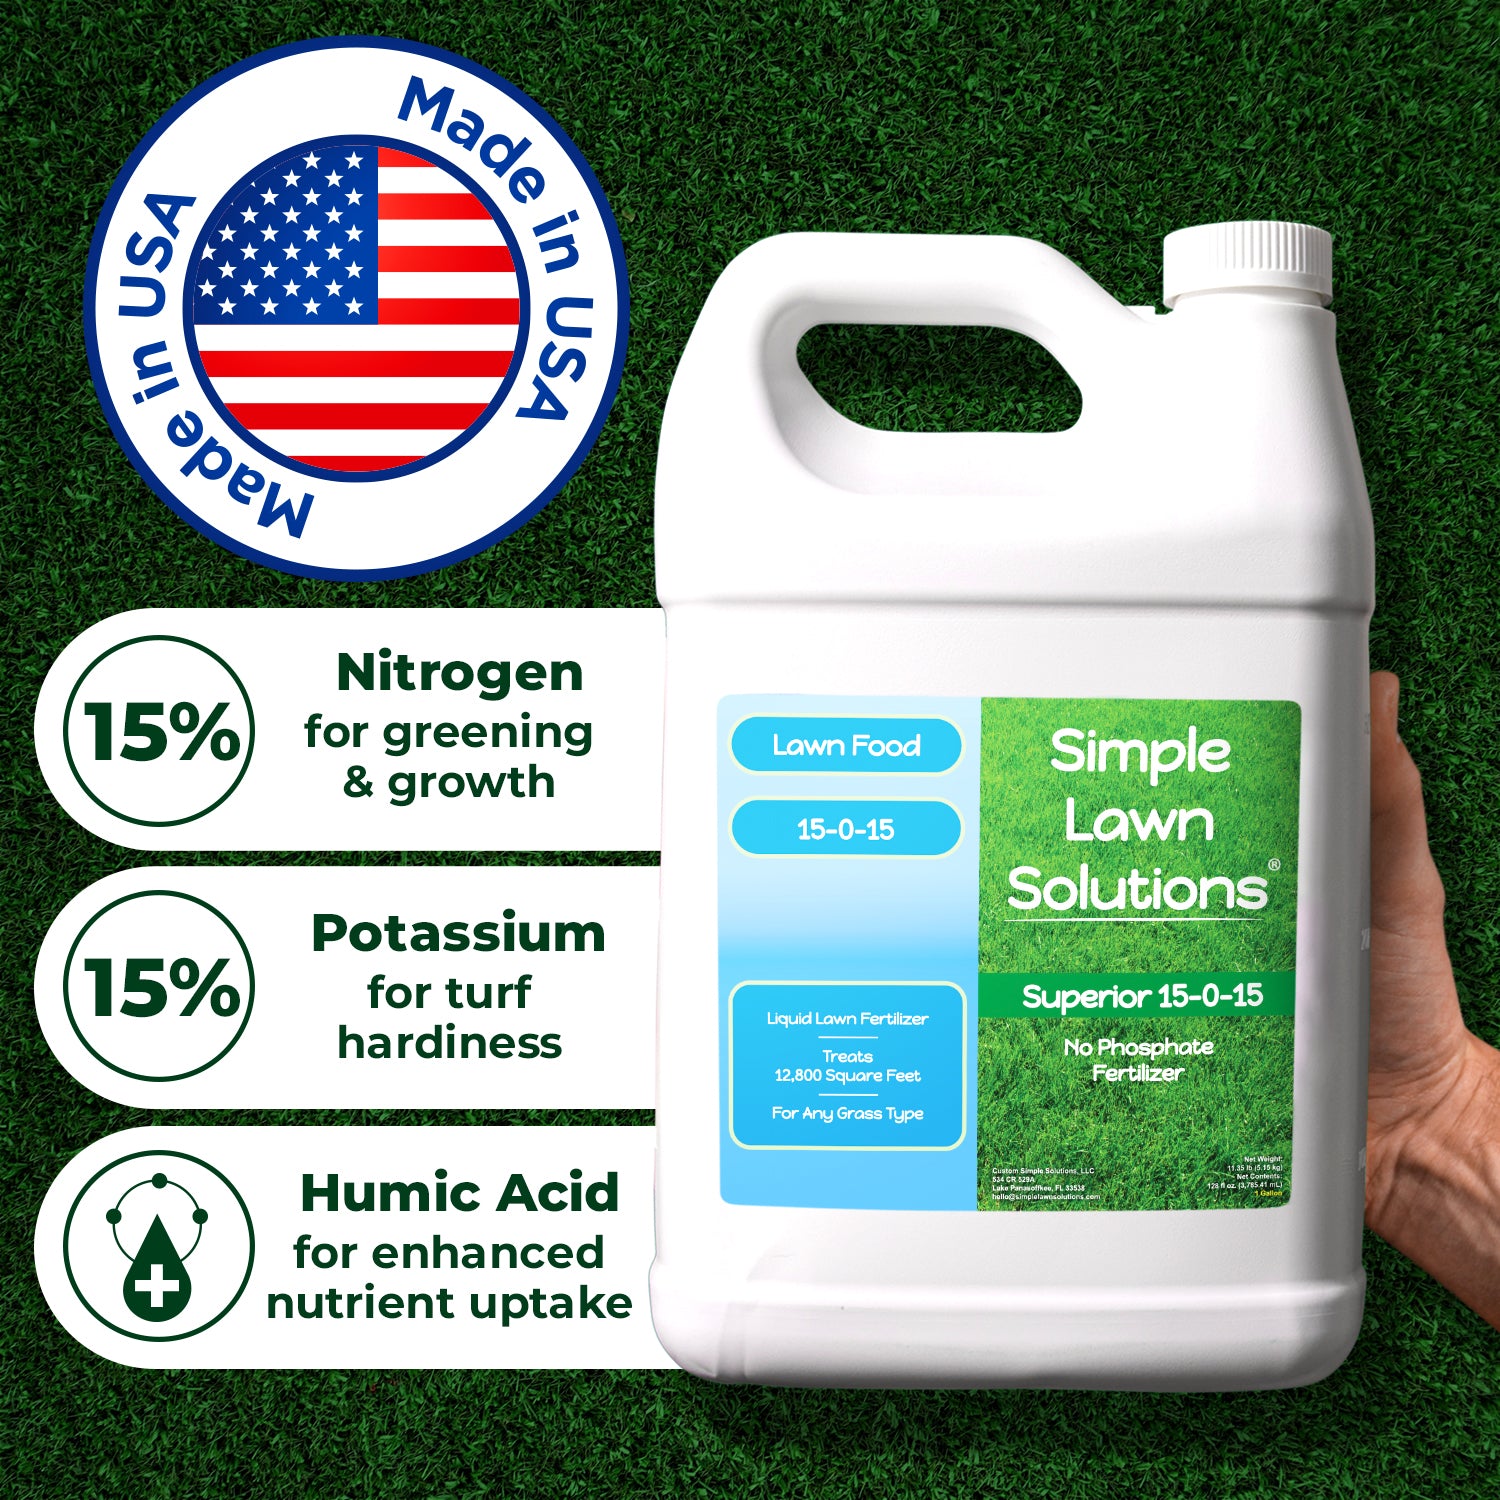 Nitrogen and potassium fertilizer made in the USA